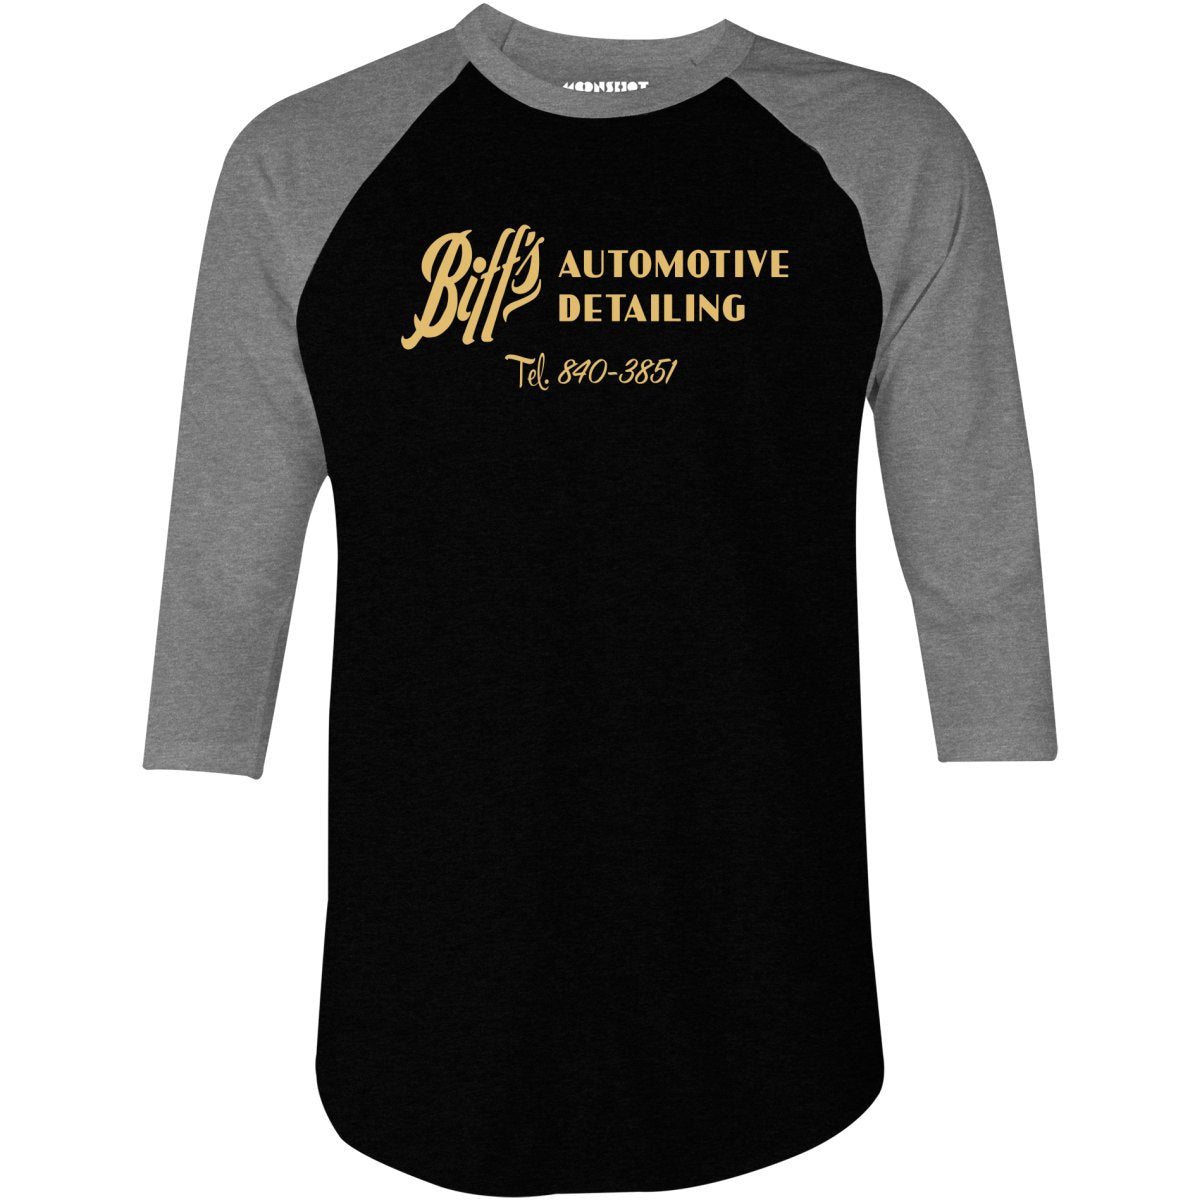 Biff's Automotive Detailing - 3/4 Sleeve Raglan T-Shirt